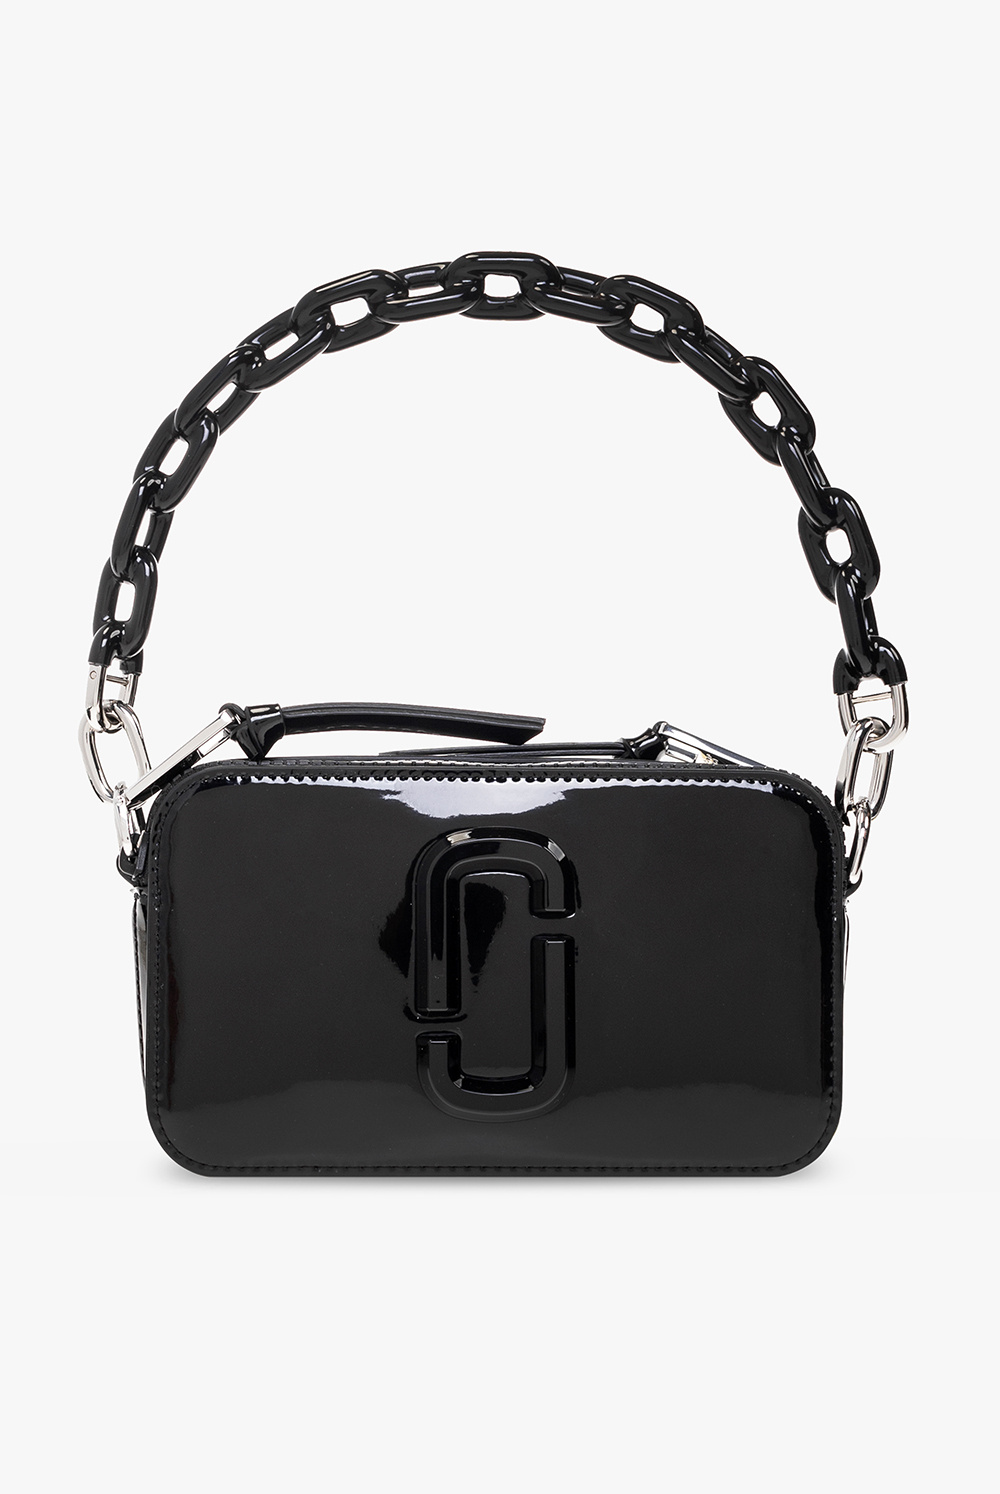 Marc Jacobs ‘The Snapshot’ patent-leather shoulder bag